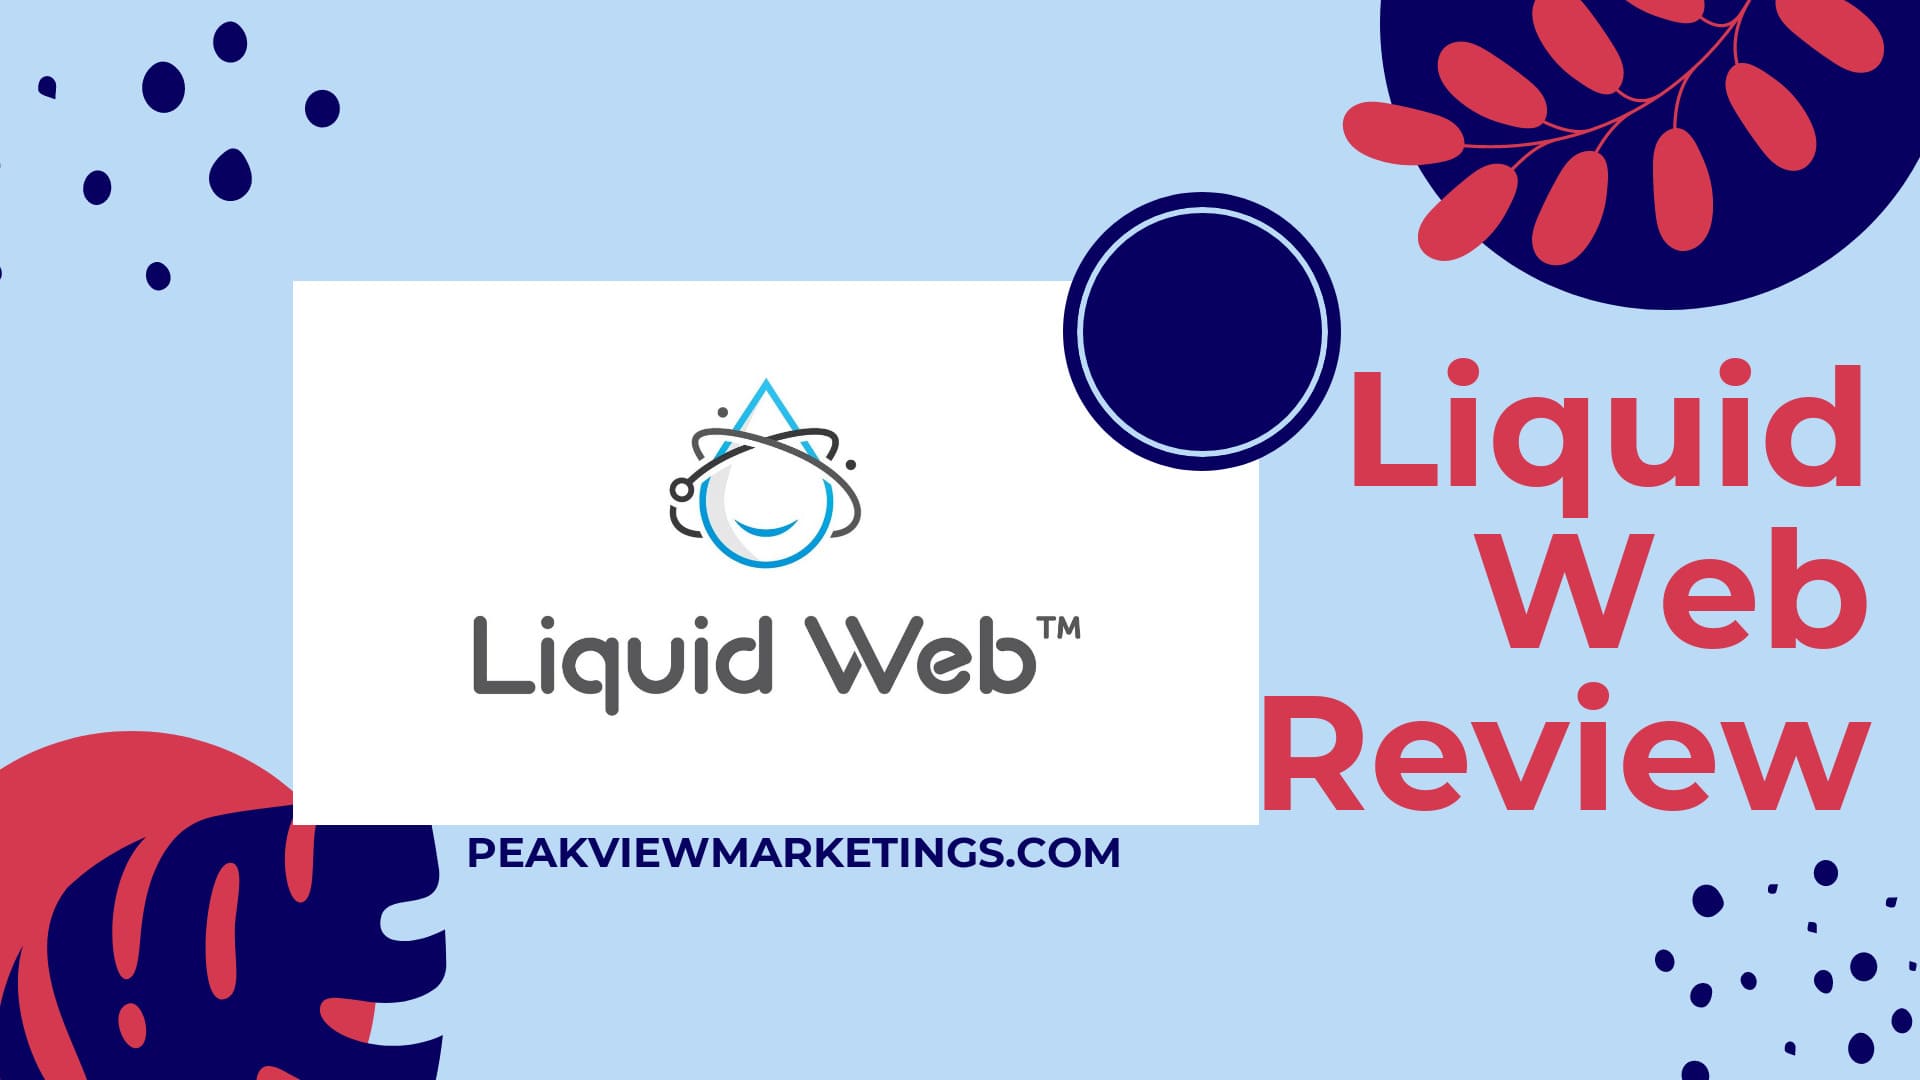 Liquid Web Review Image